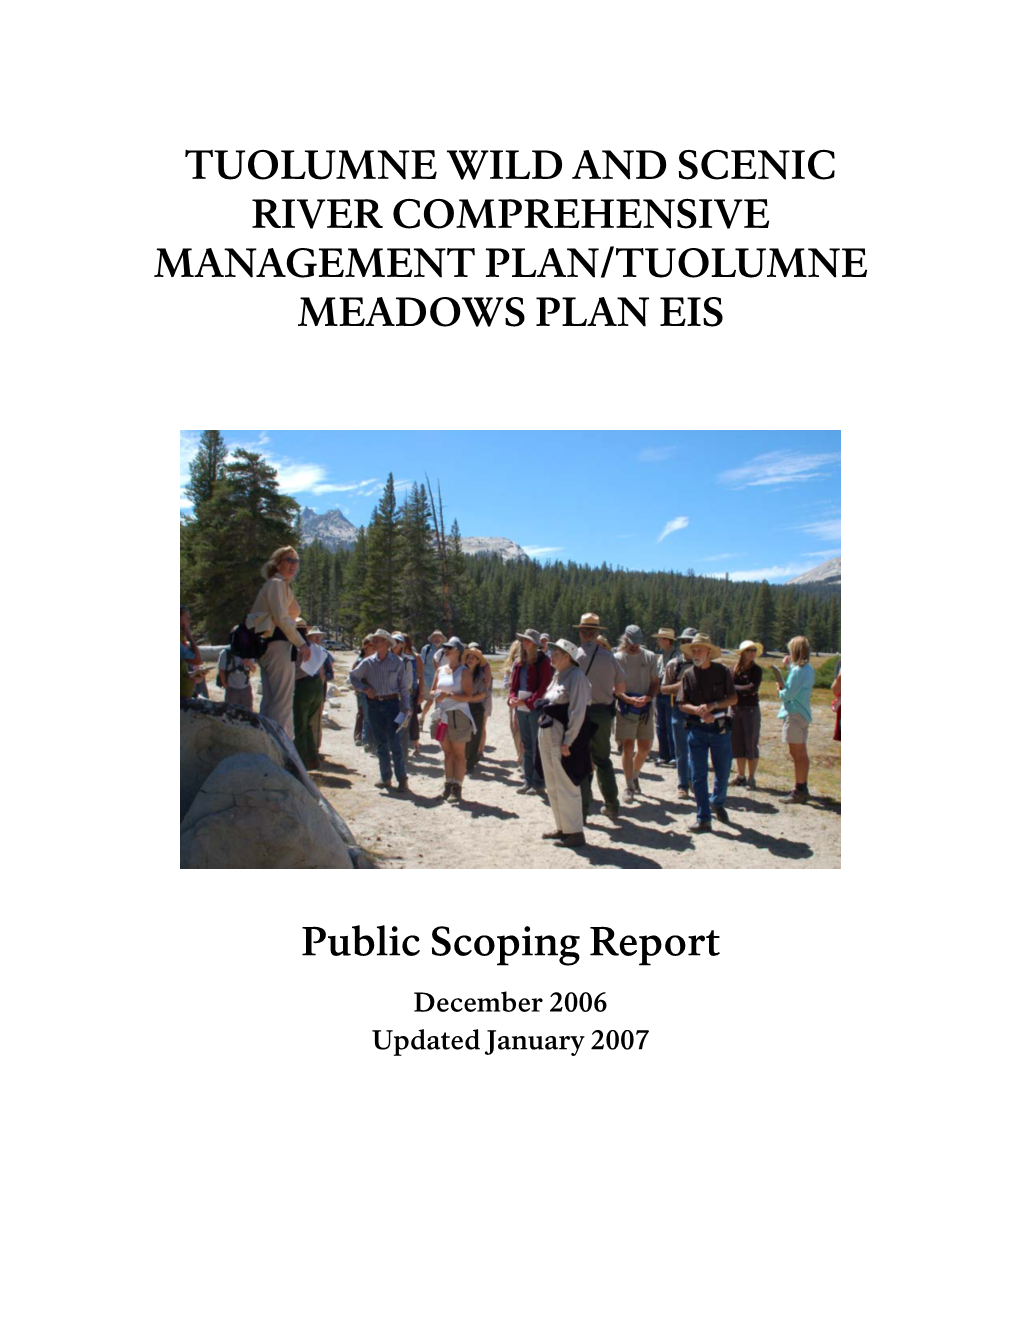 Tuolumne Wild and Scenic River Comprehensive Management Plan/Tuolumne Meadows Plan Eis